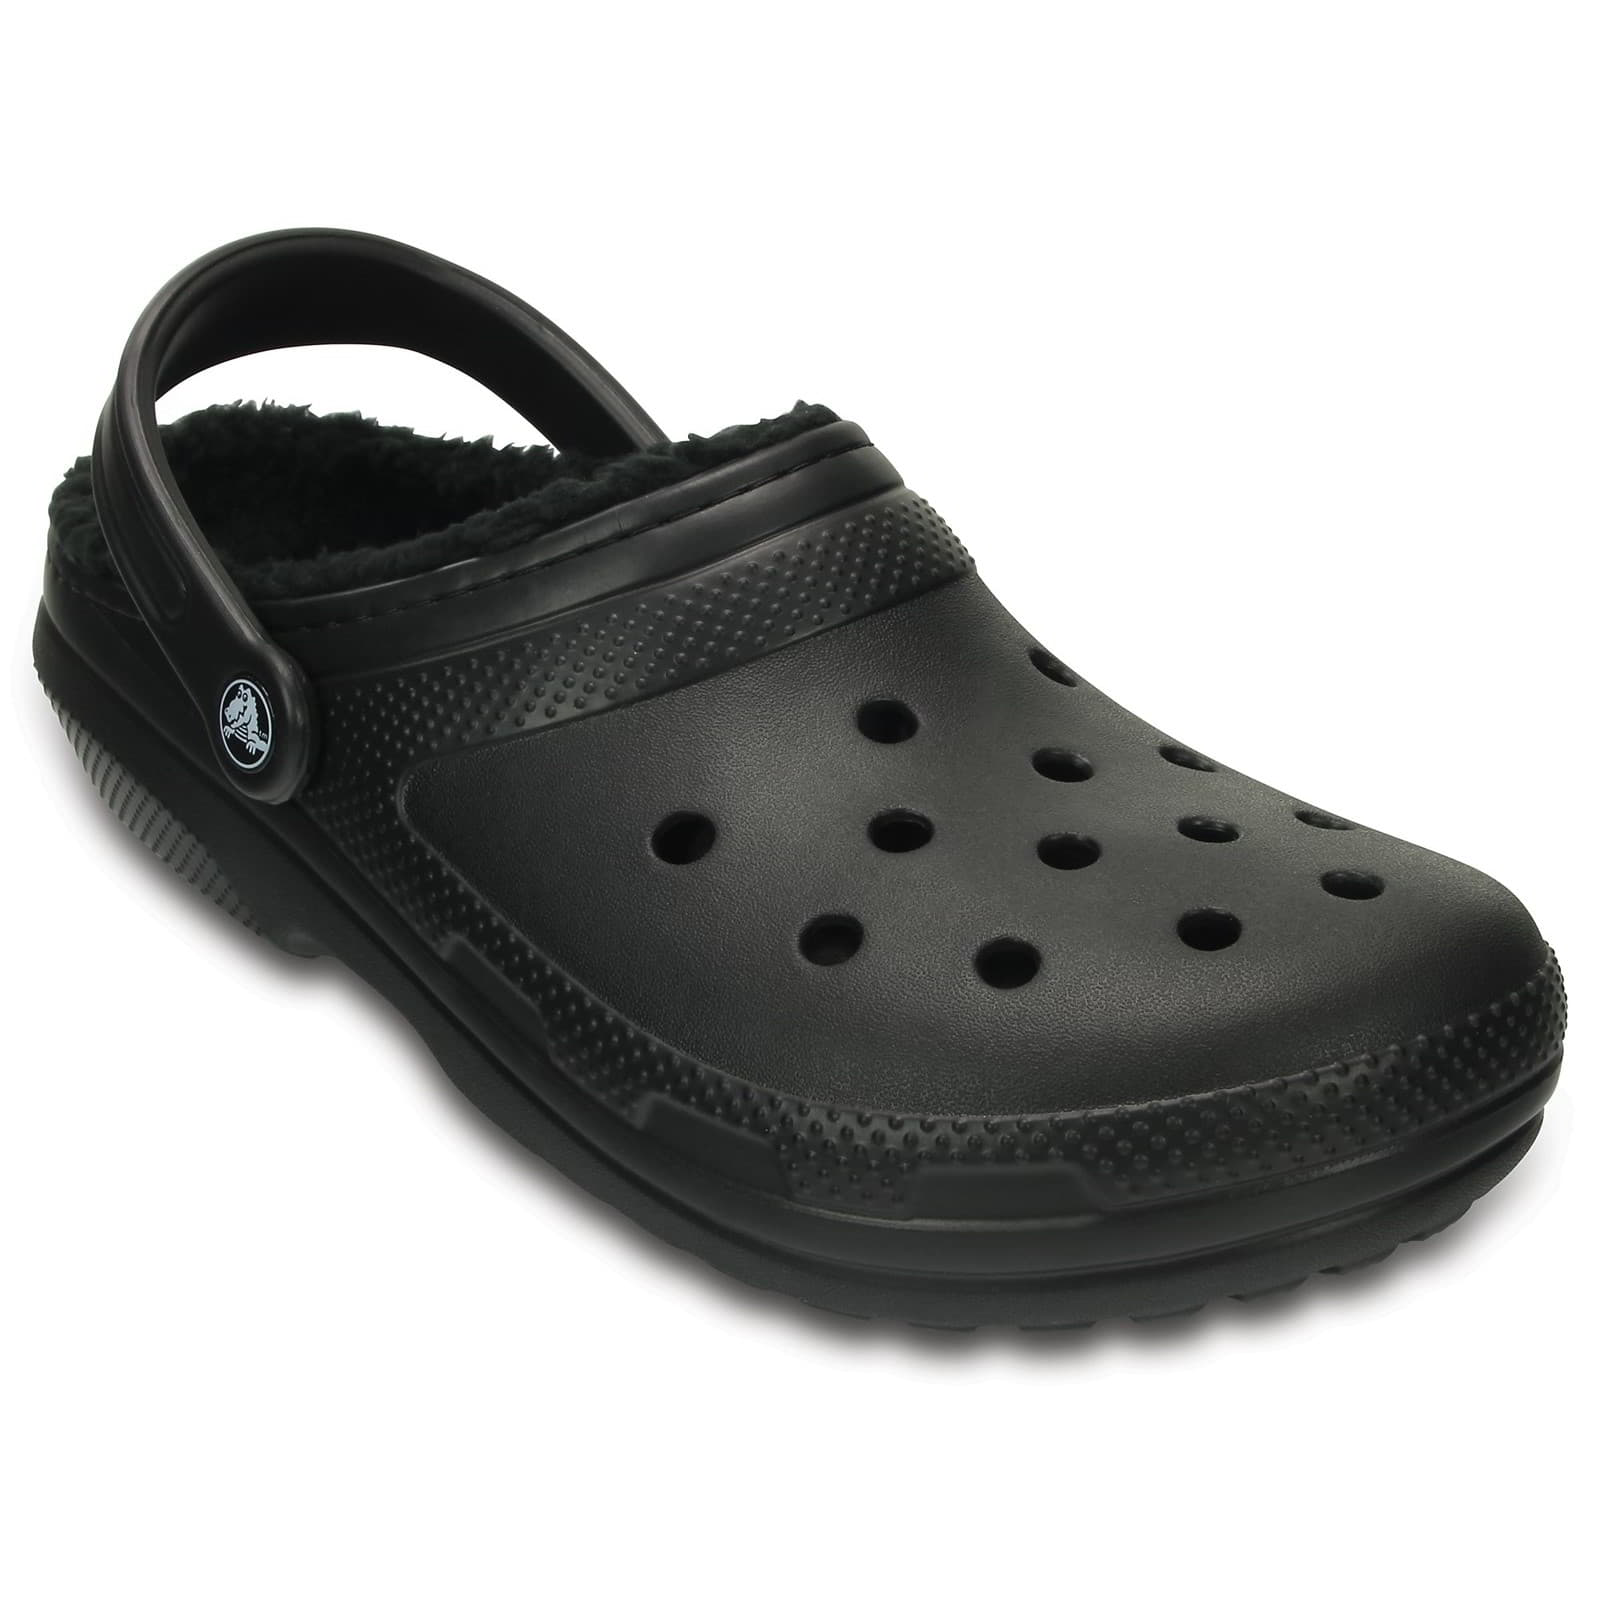 Crocs Men's Women's Classic Lined Clogs Slip On Slippers Shoes - UK 8